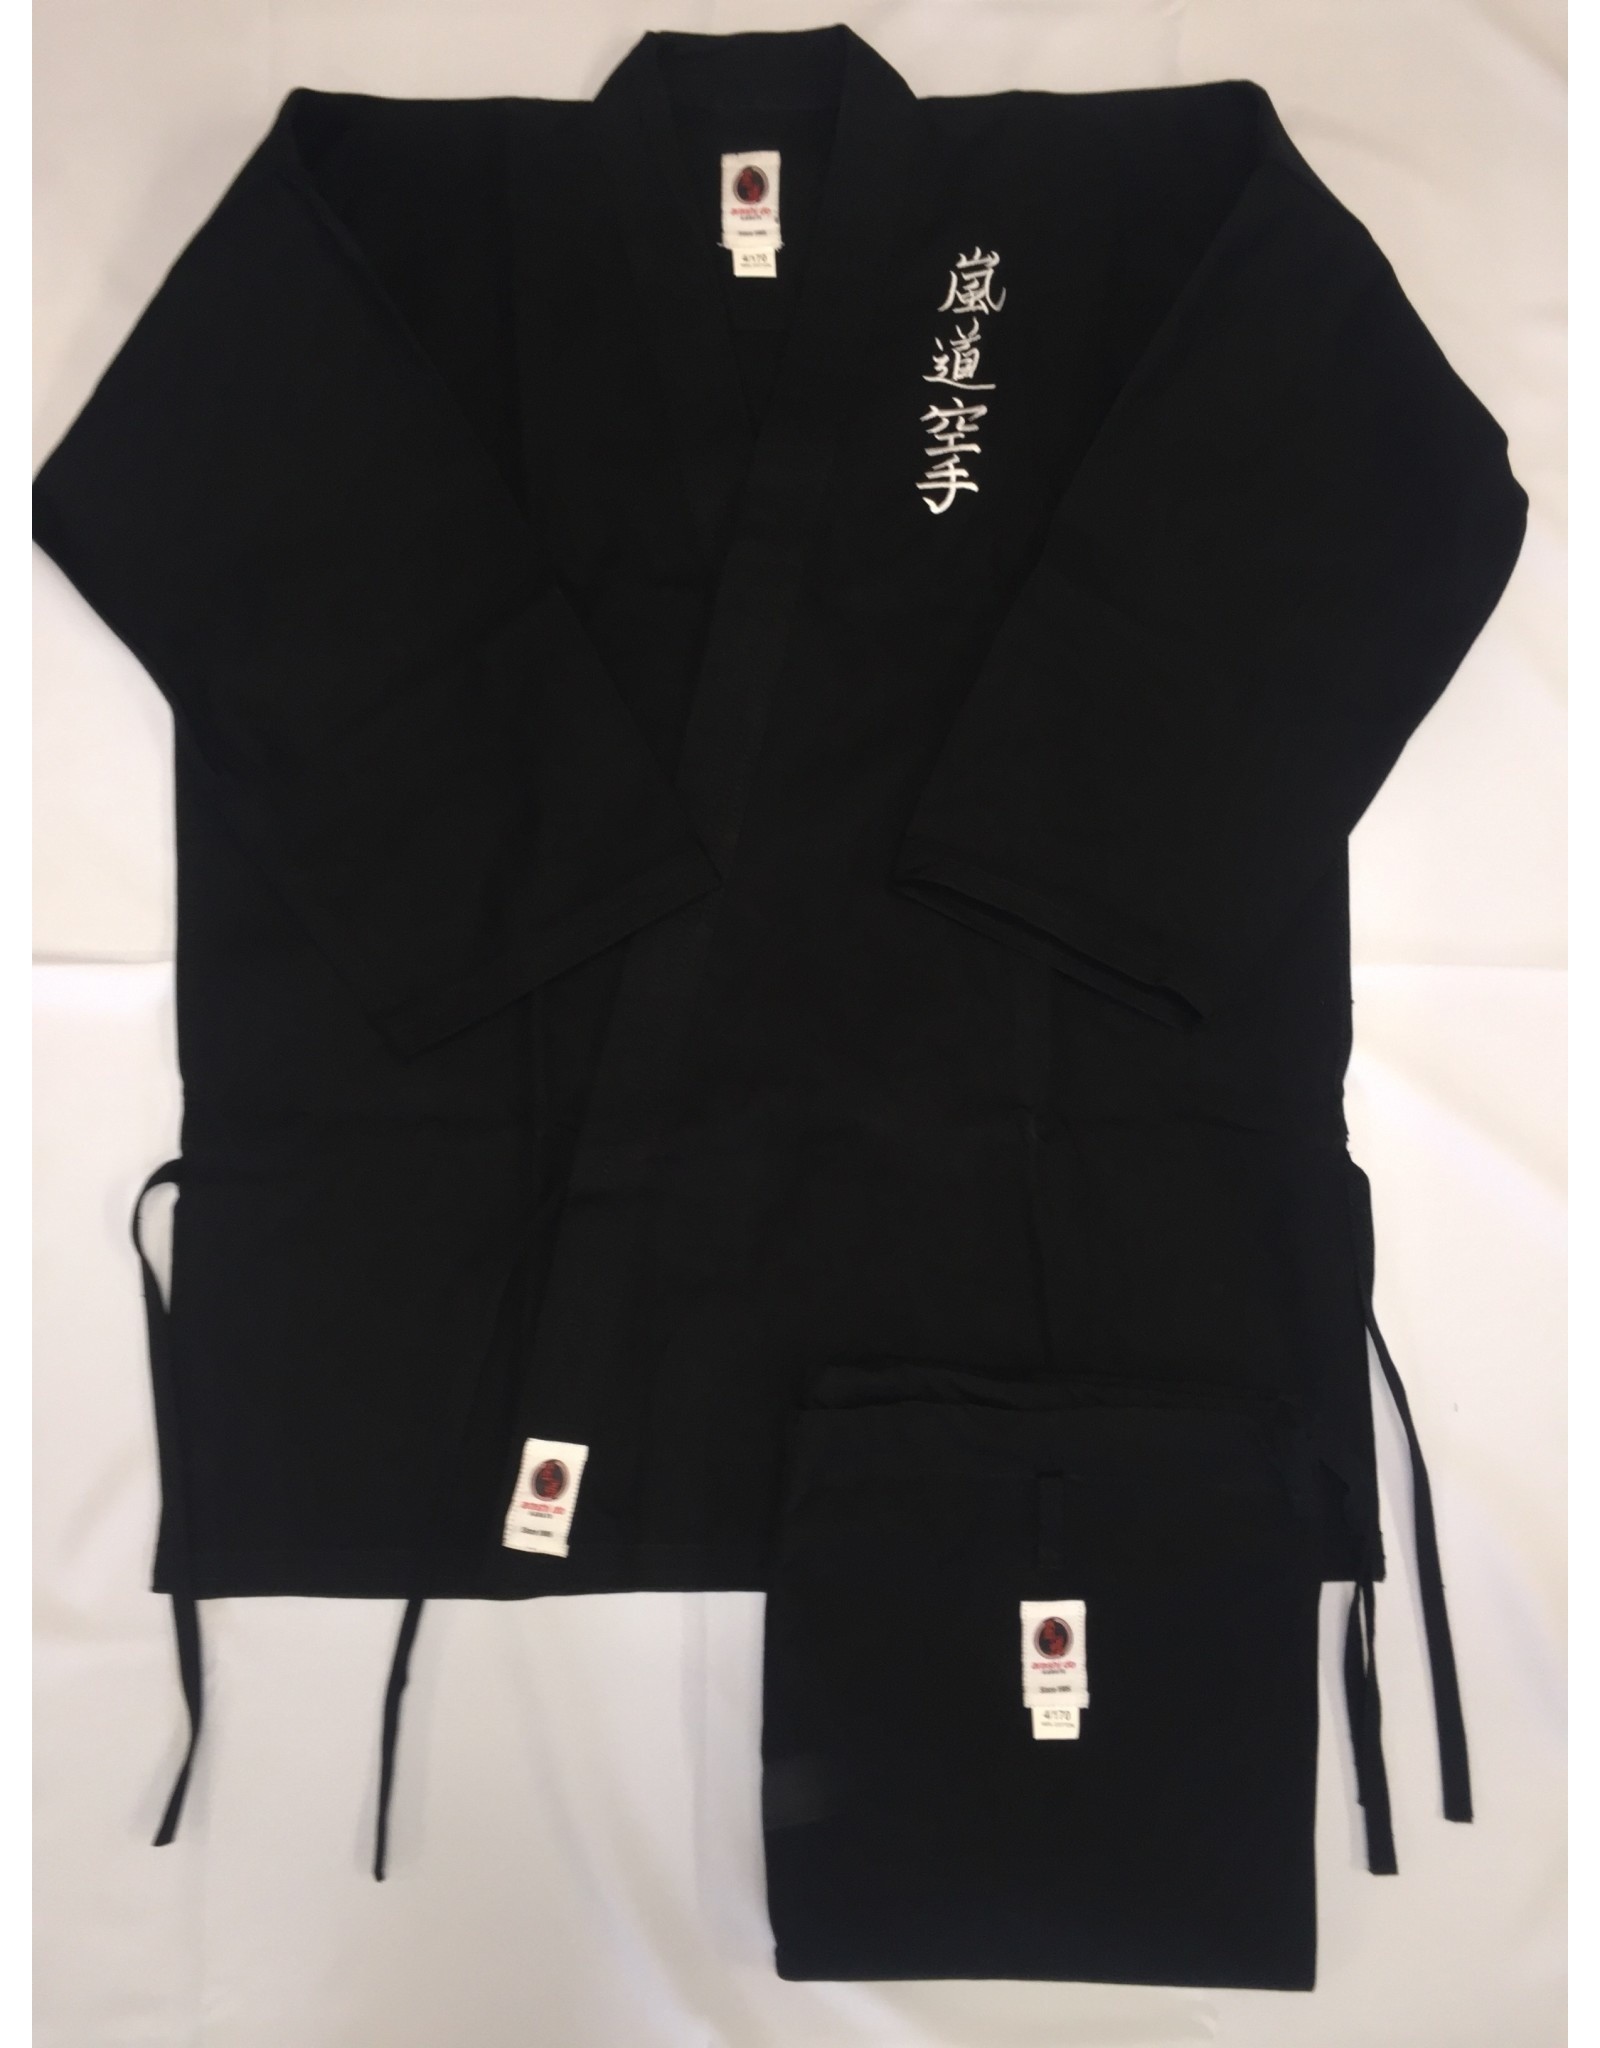 ADMA Karate Uniforms - Heavyweight